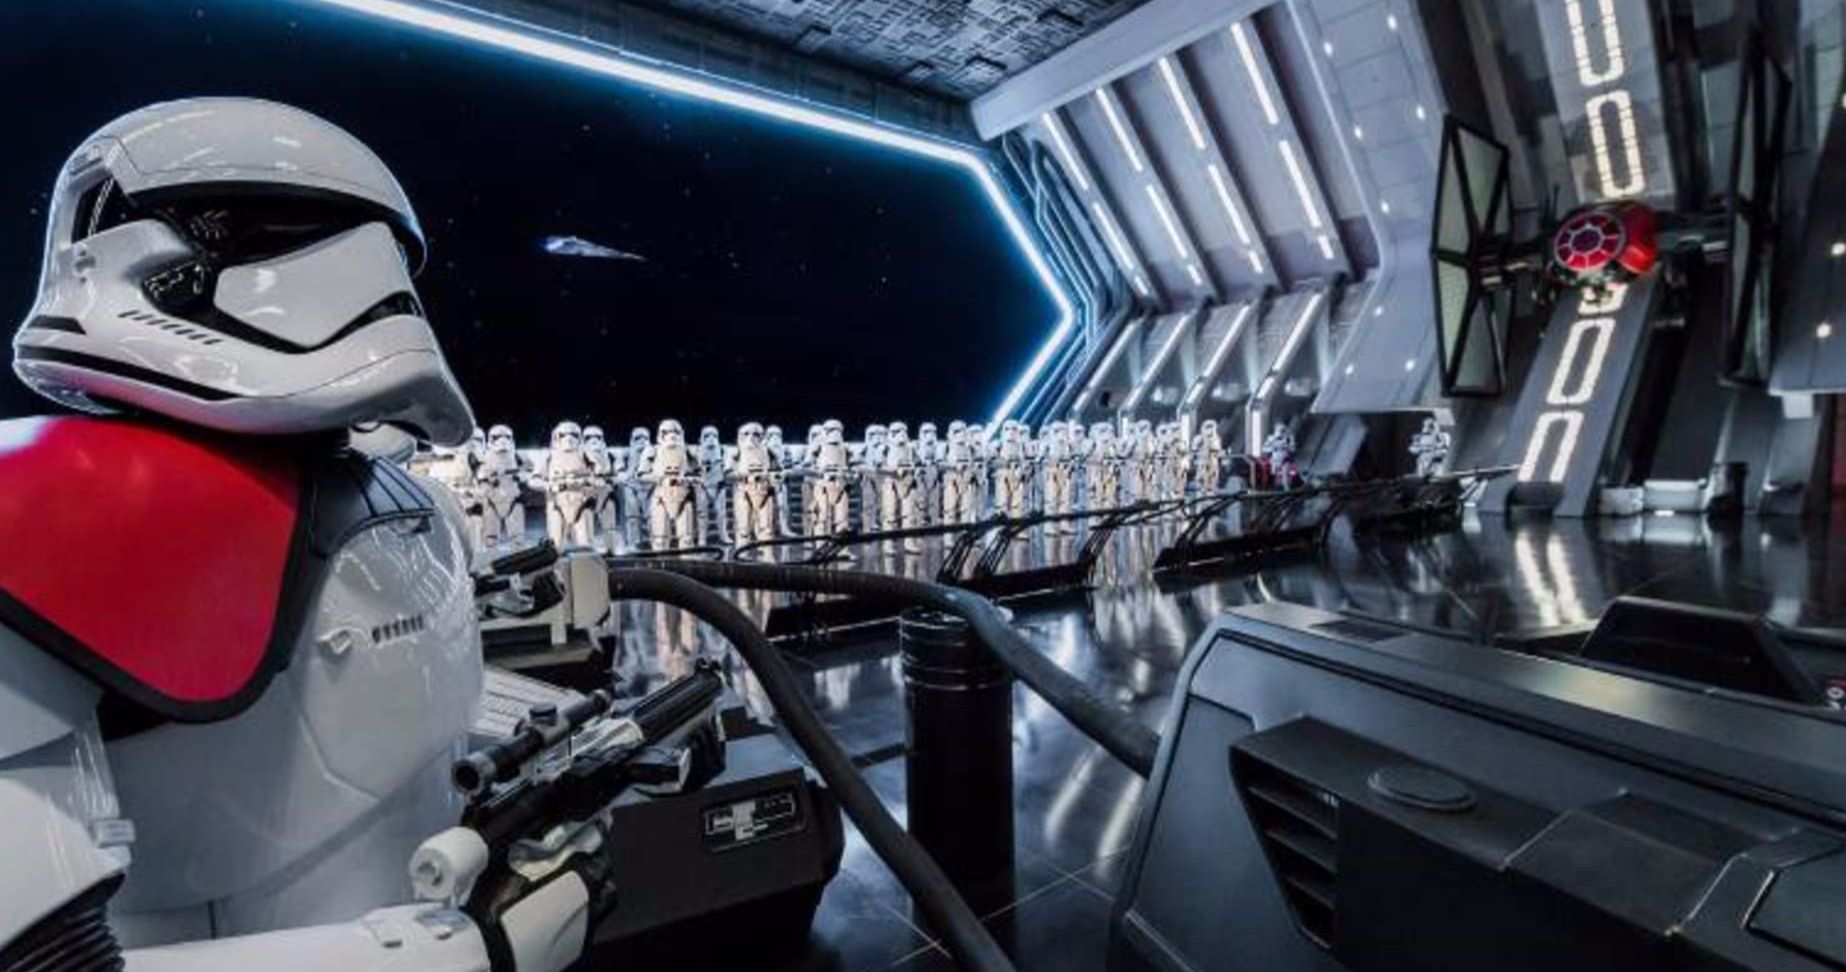 Rise of the Resistance Sneak Peek Reveals Disney's New Star Wars